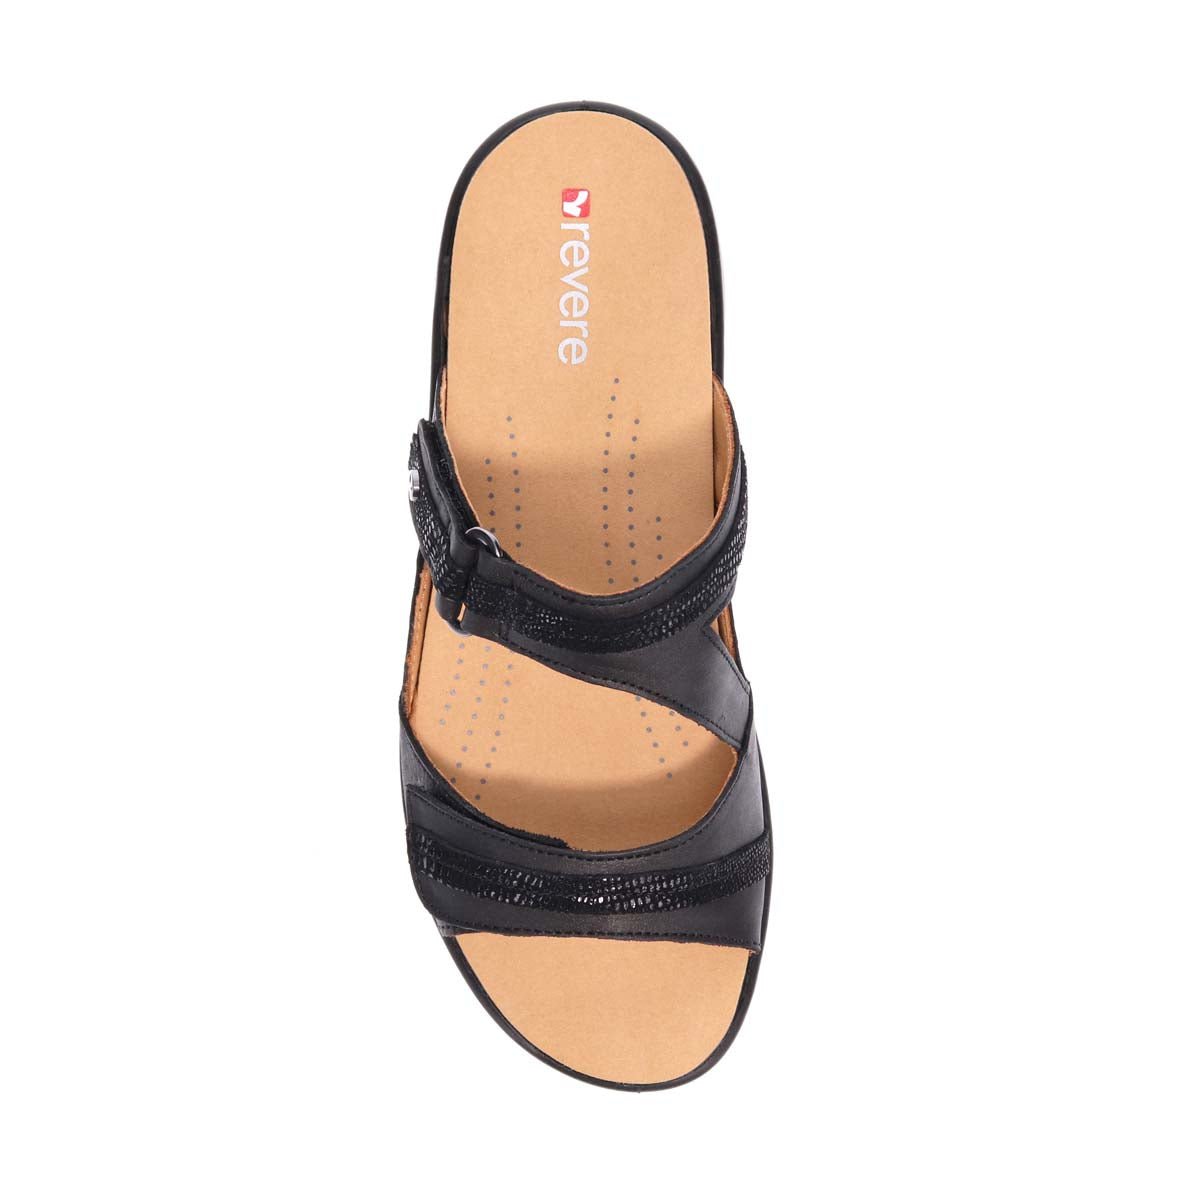 REVERE RIO WOMEN SANDALS IN ONYX/BLACK LIZARD - TLW Shoes